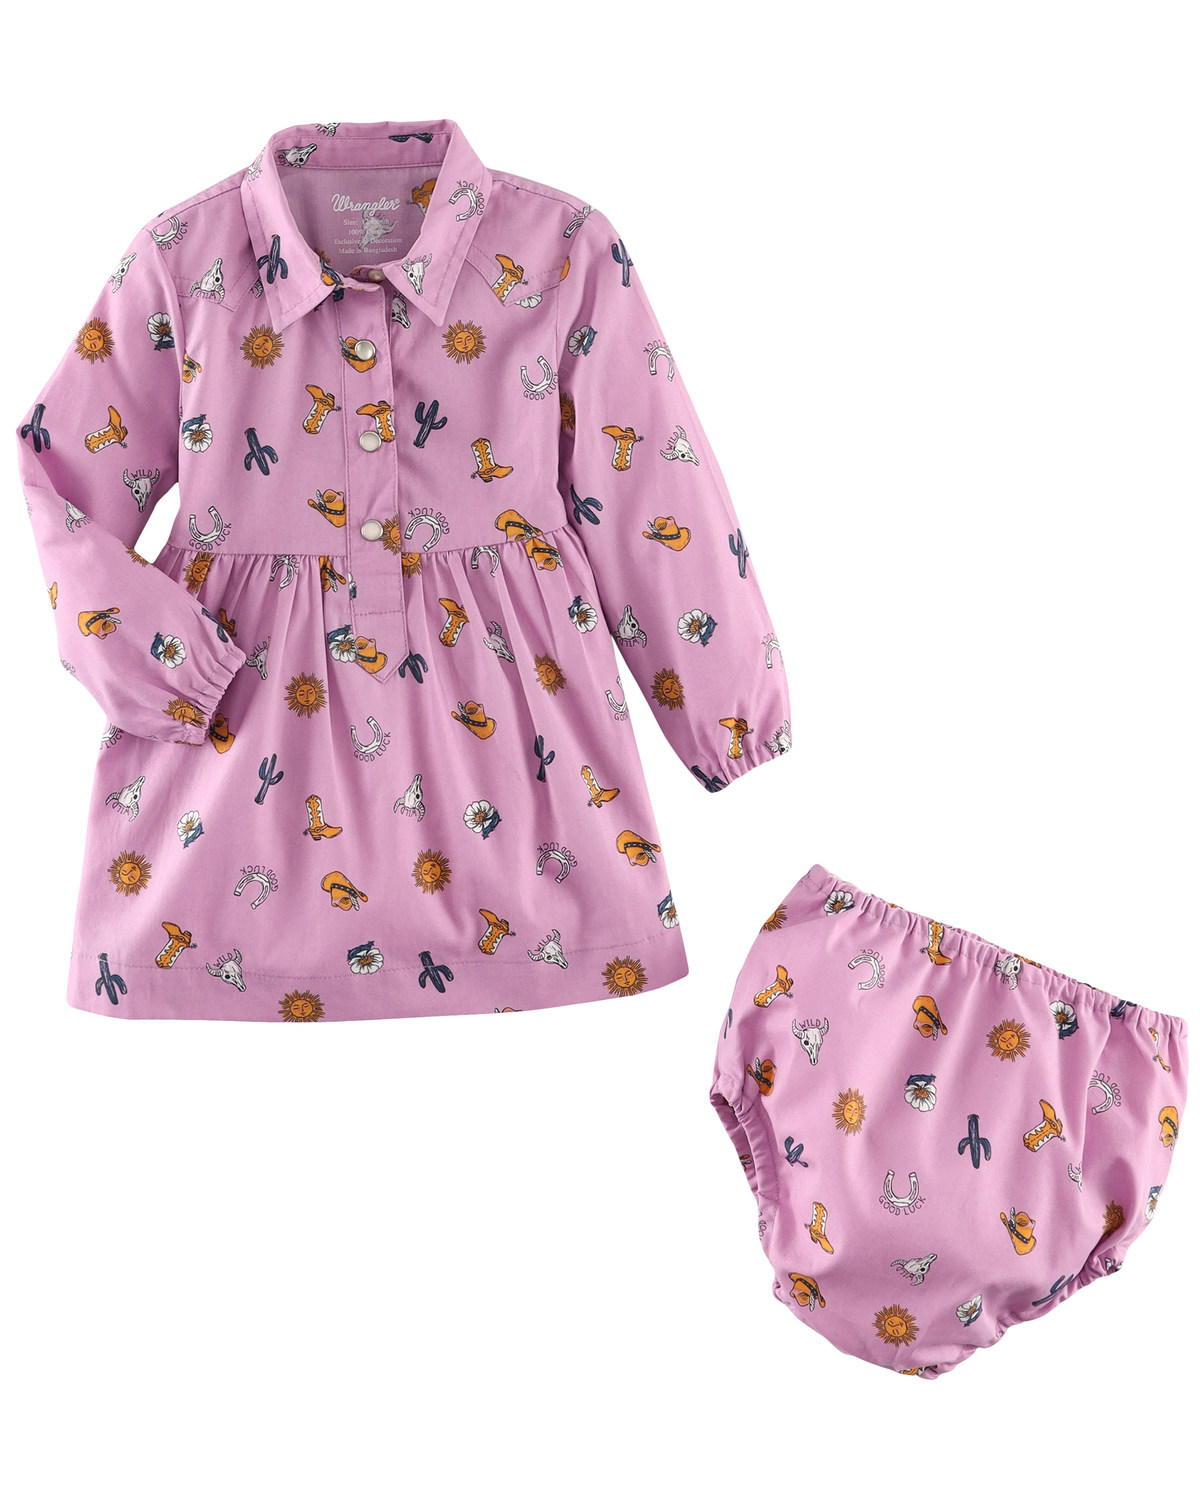 Wrangler Infant Girls' Conversation Print Dress and Diaper Cover - 2 Piece